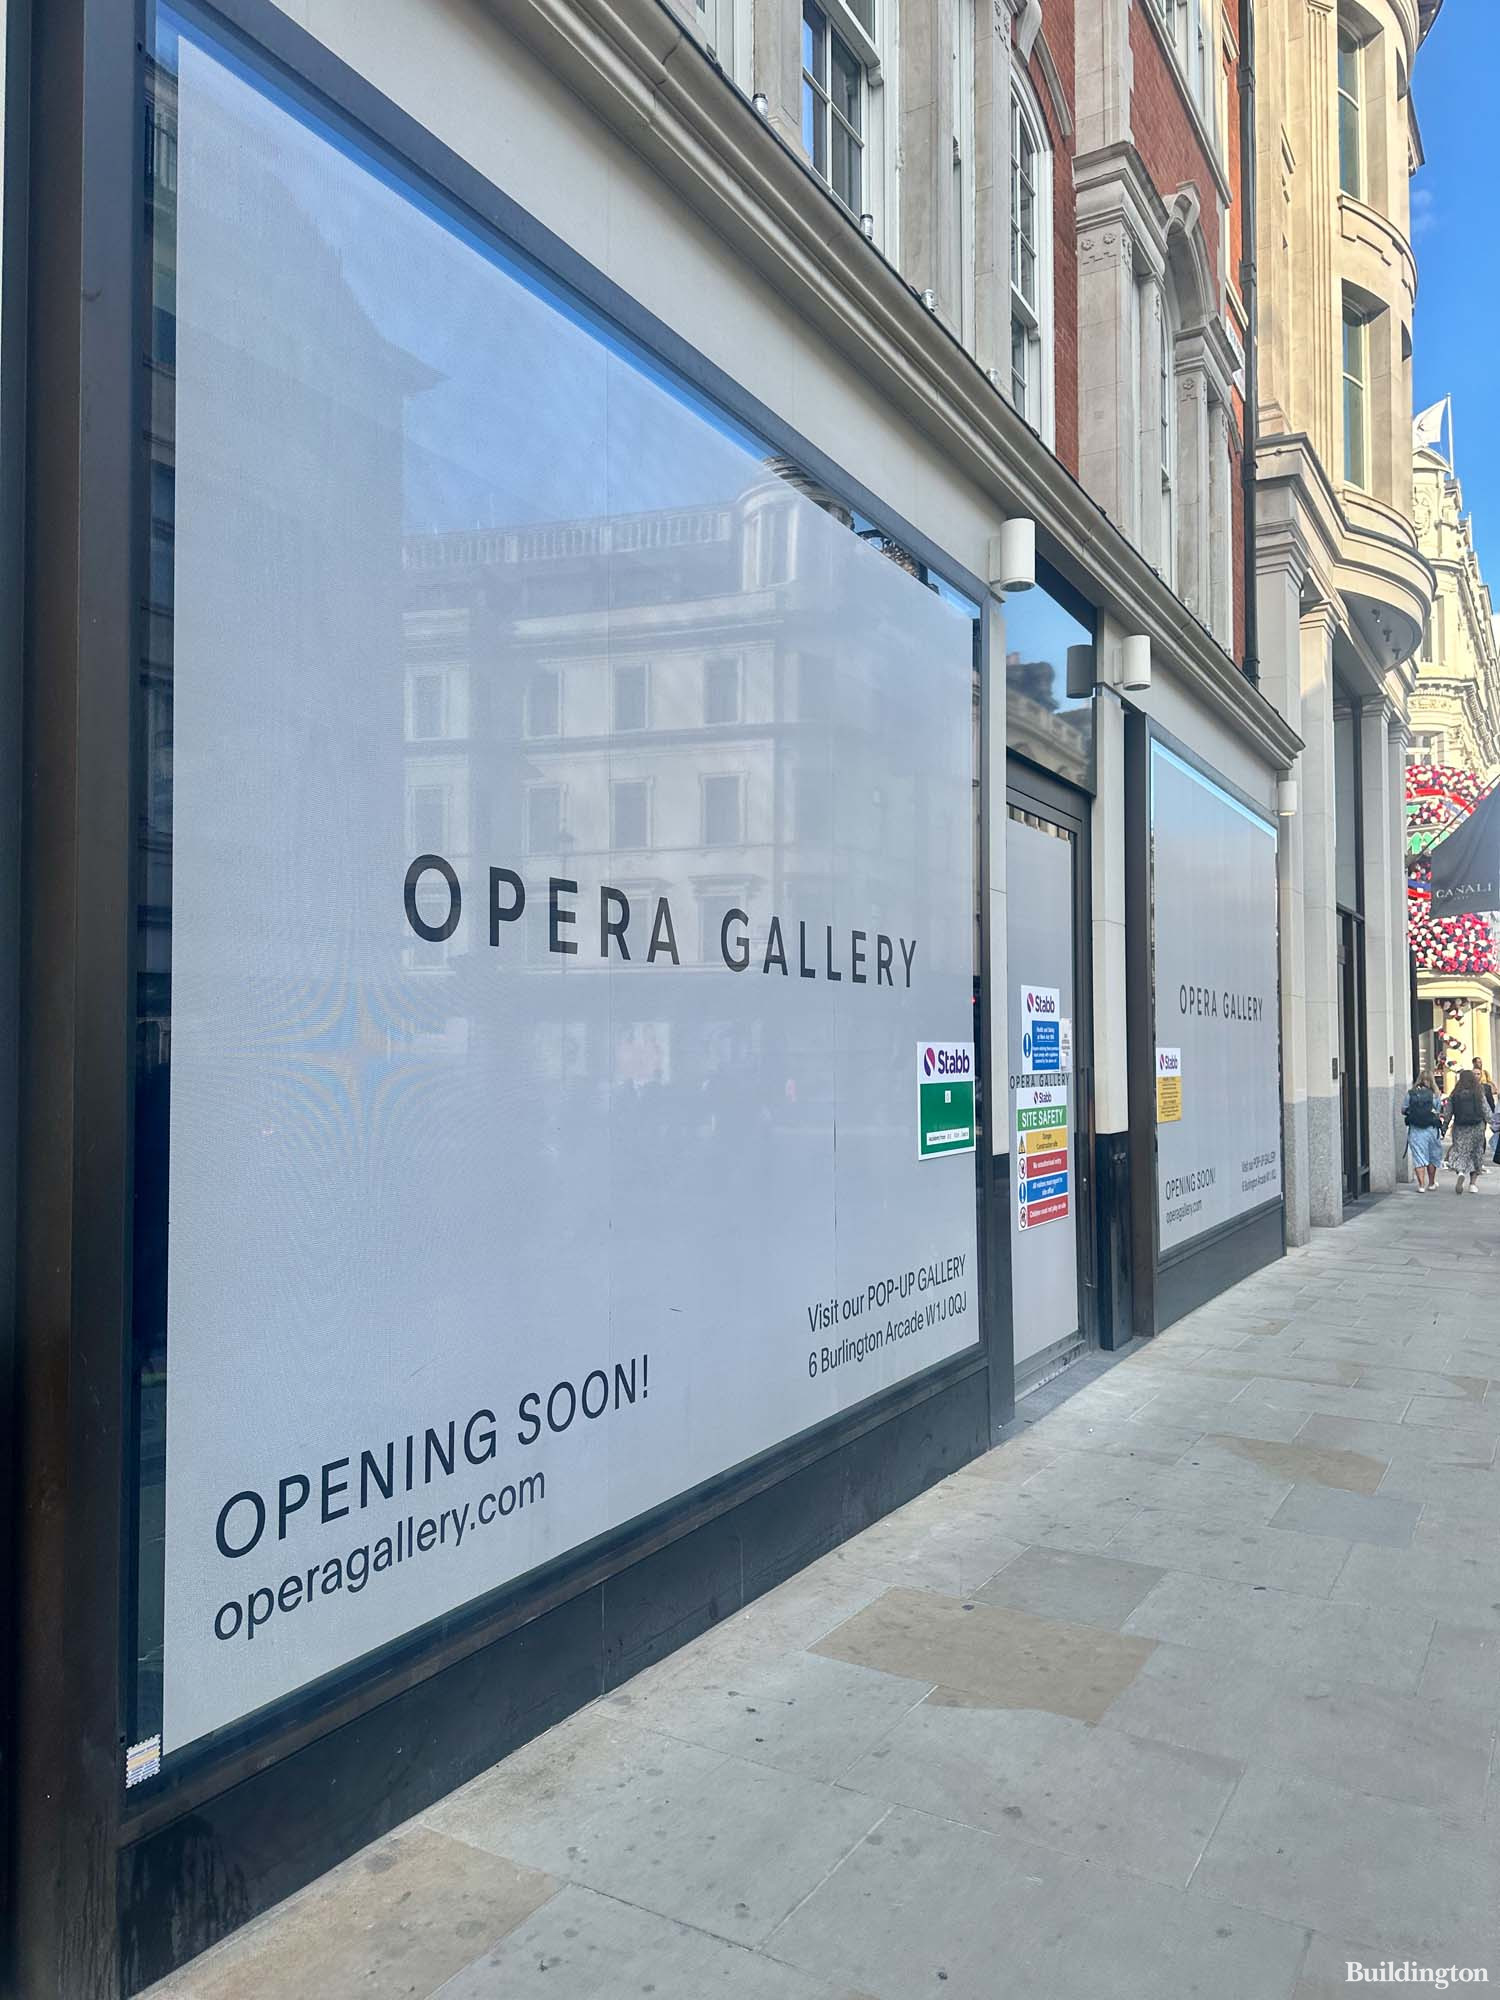 Opera Gallery opening soon at 66 New Bond Street building in Mayfair, London W1.